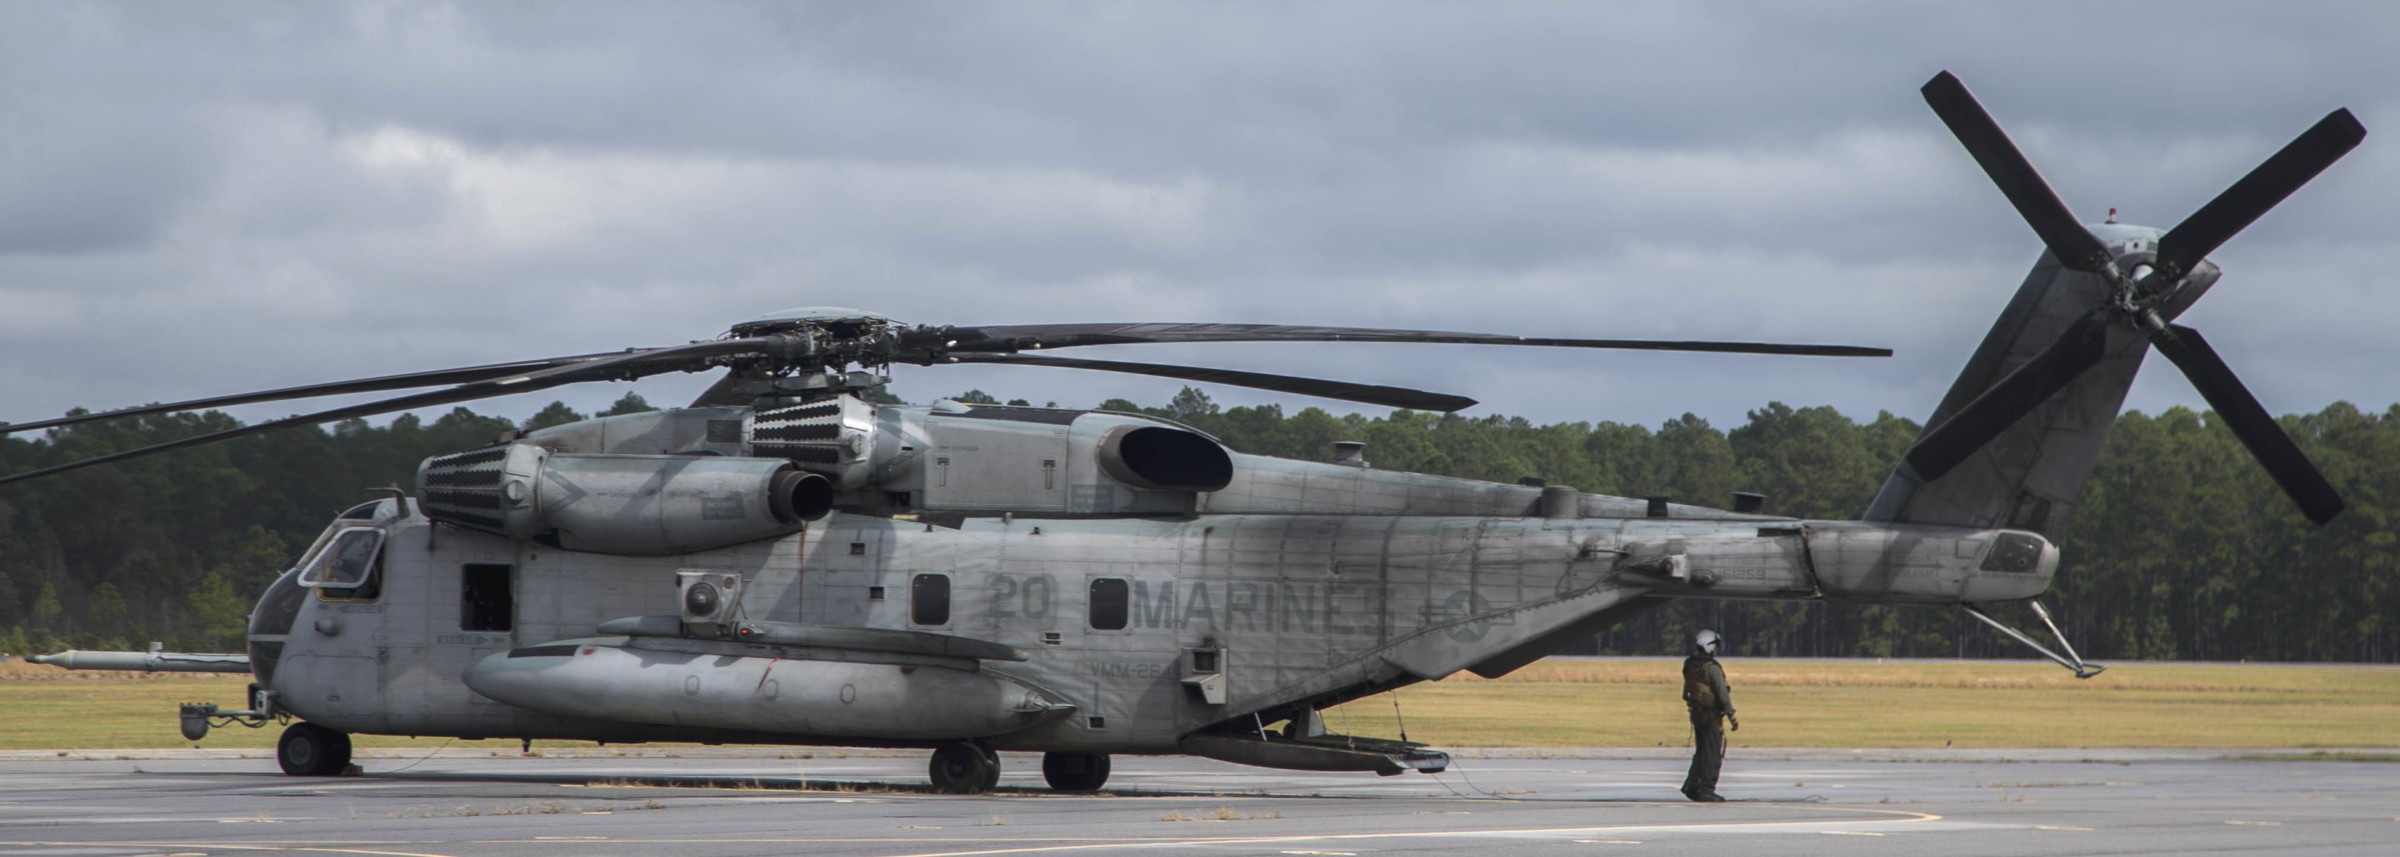 hmh-366 hammerheads ch-53e super stallion marine heavy helicopter squadron usmc 136